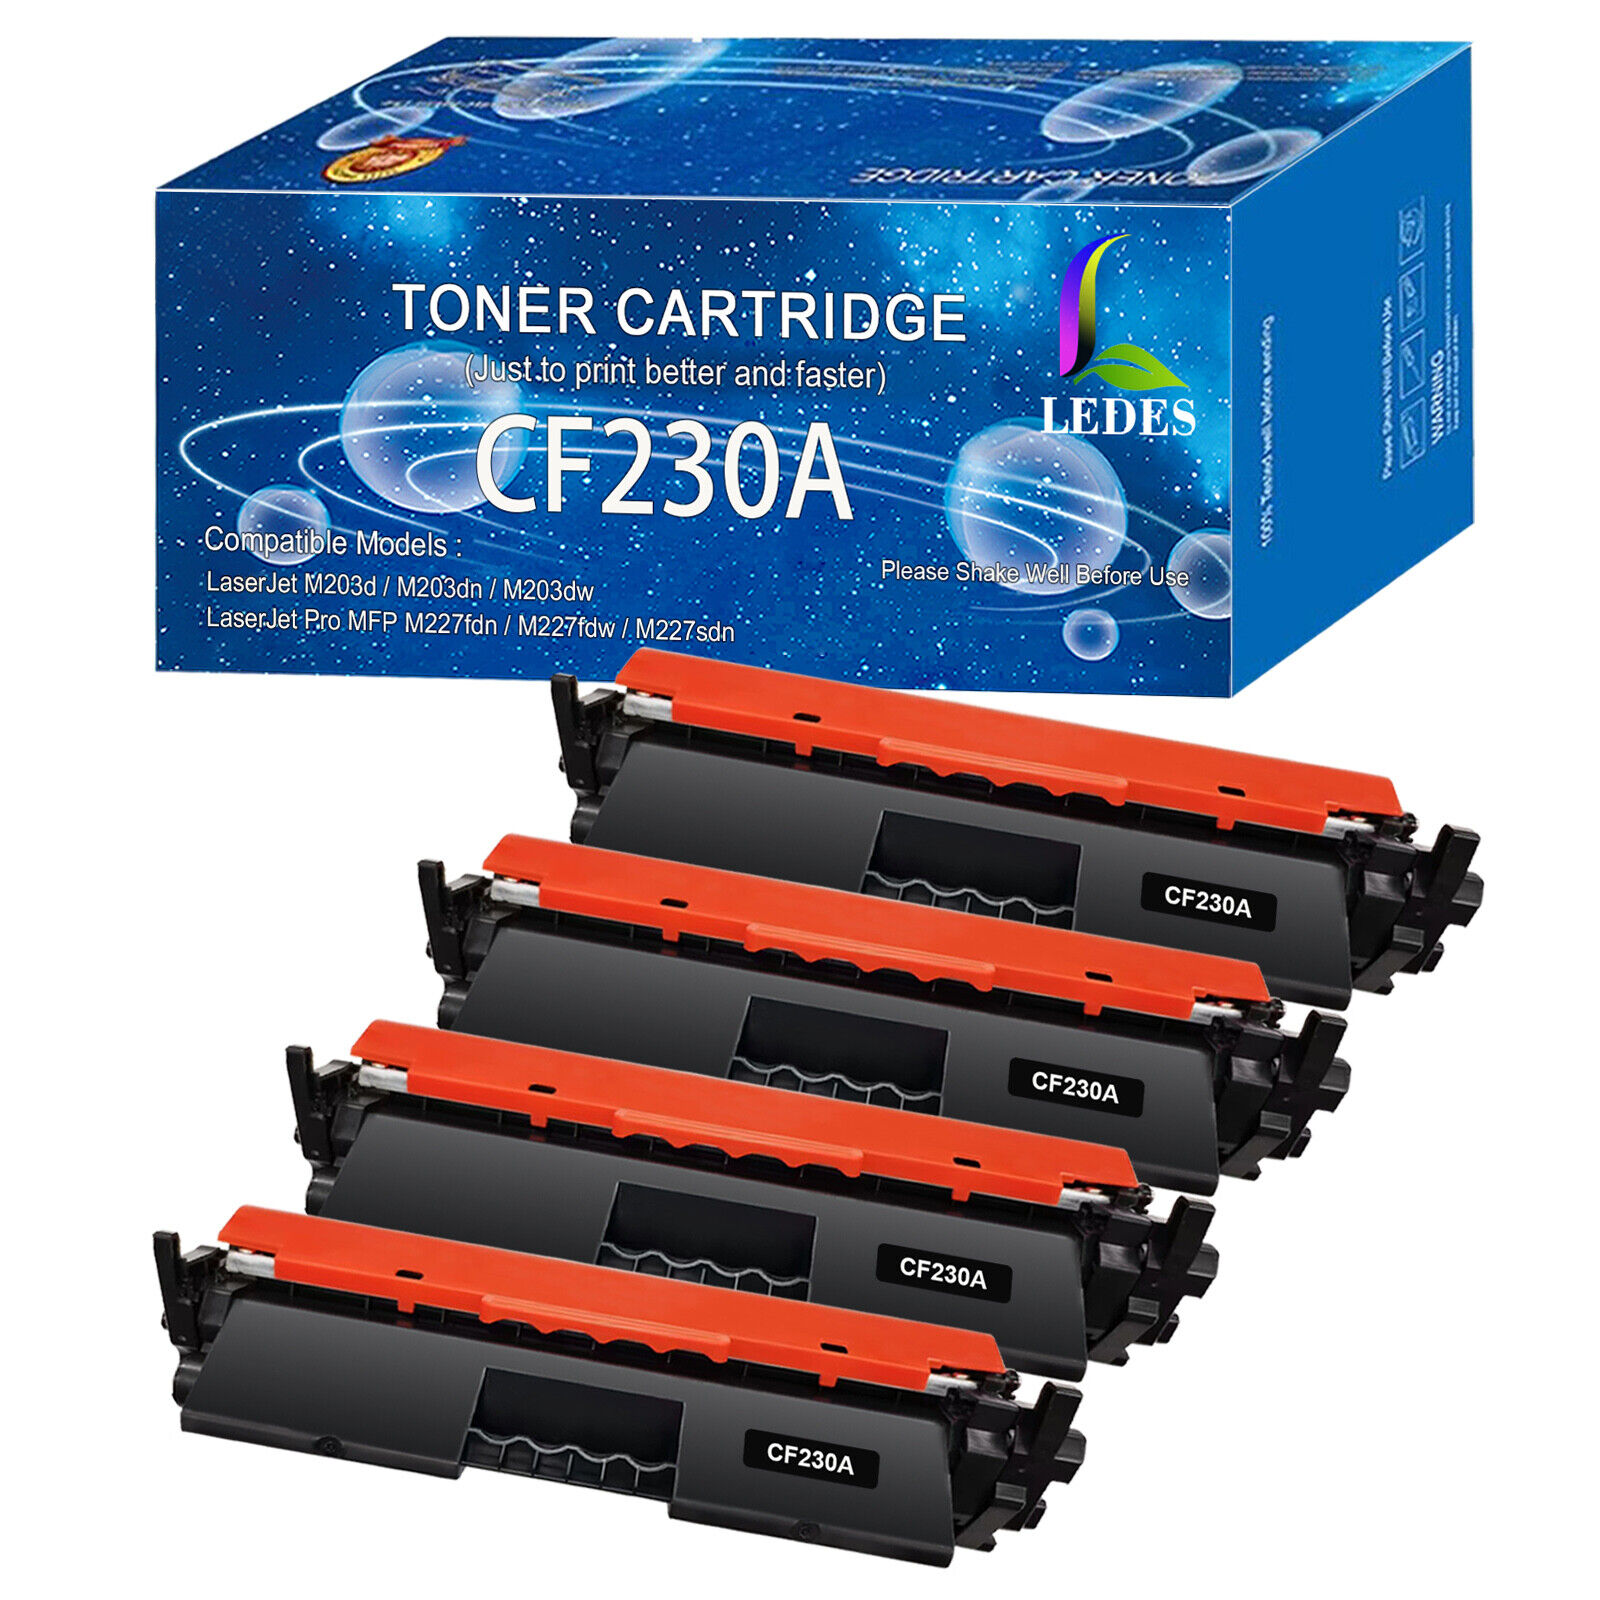 4X Toner Cartridge CF230A For HP LaserJet Pro MFP M227fdn M227fdw M227sdn/M203d